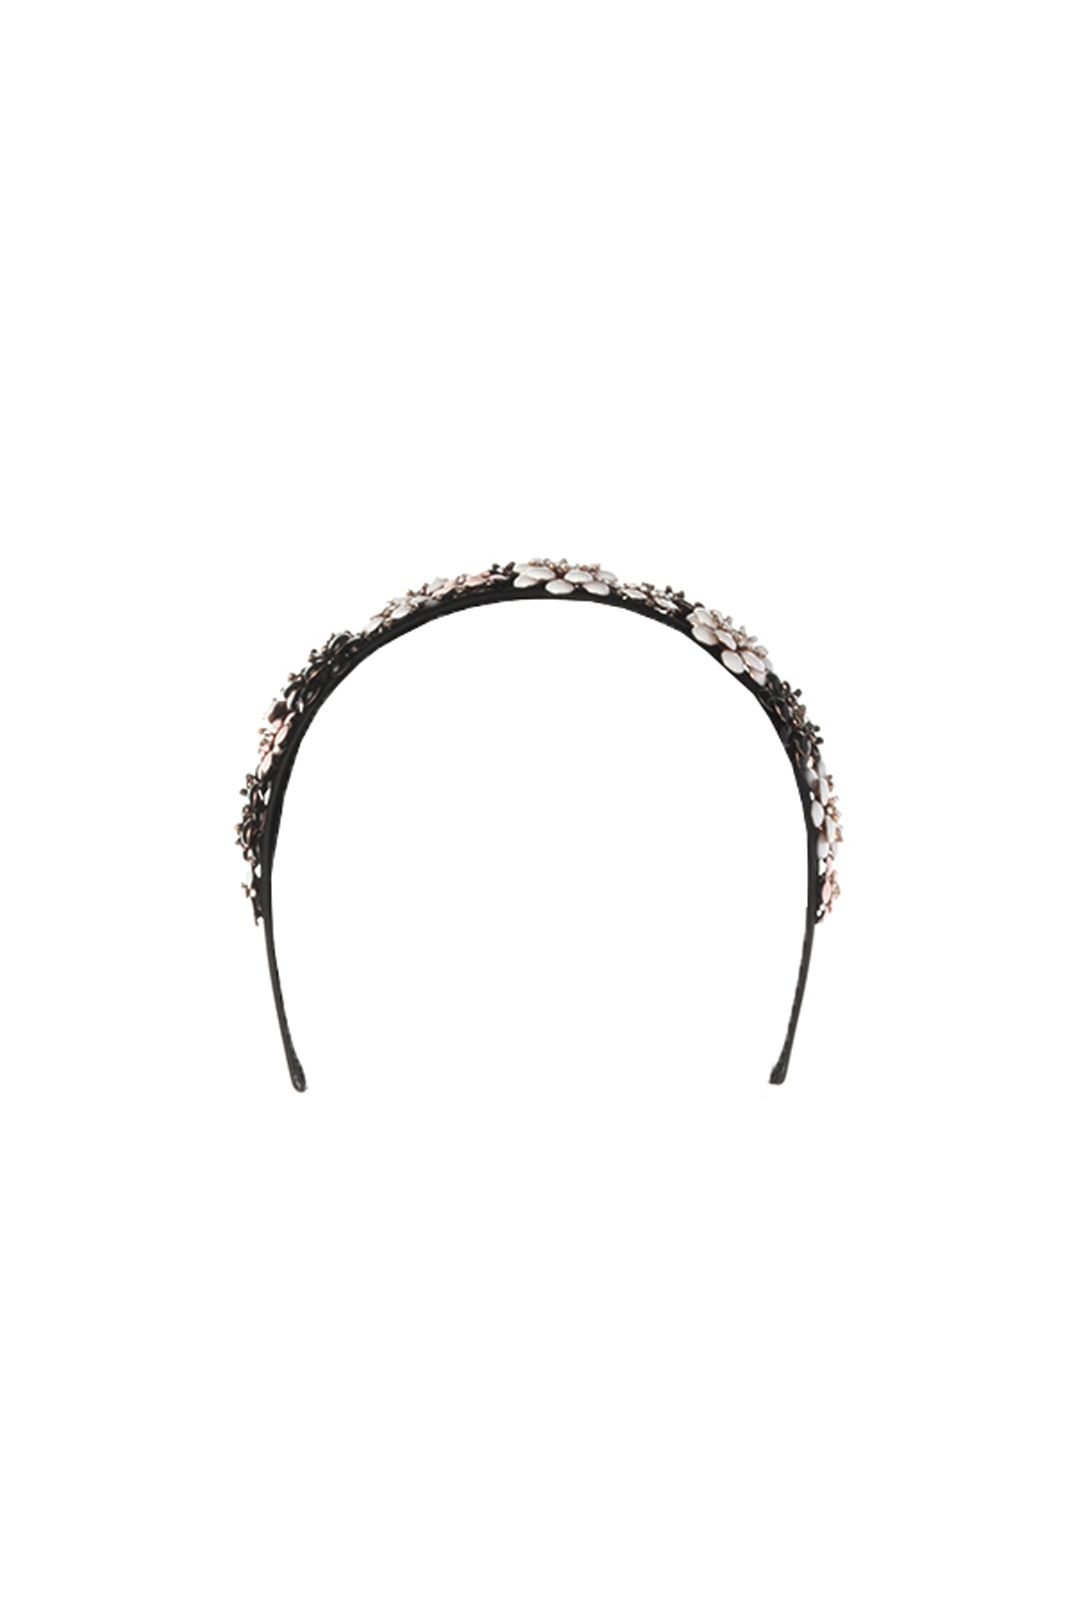 Olga Berg - Victoria Floral Headband - Black Floral - Front